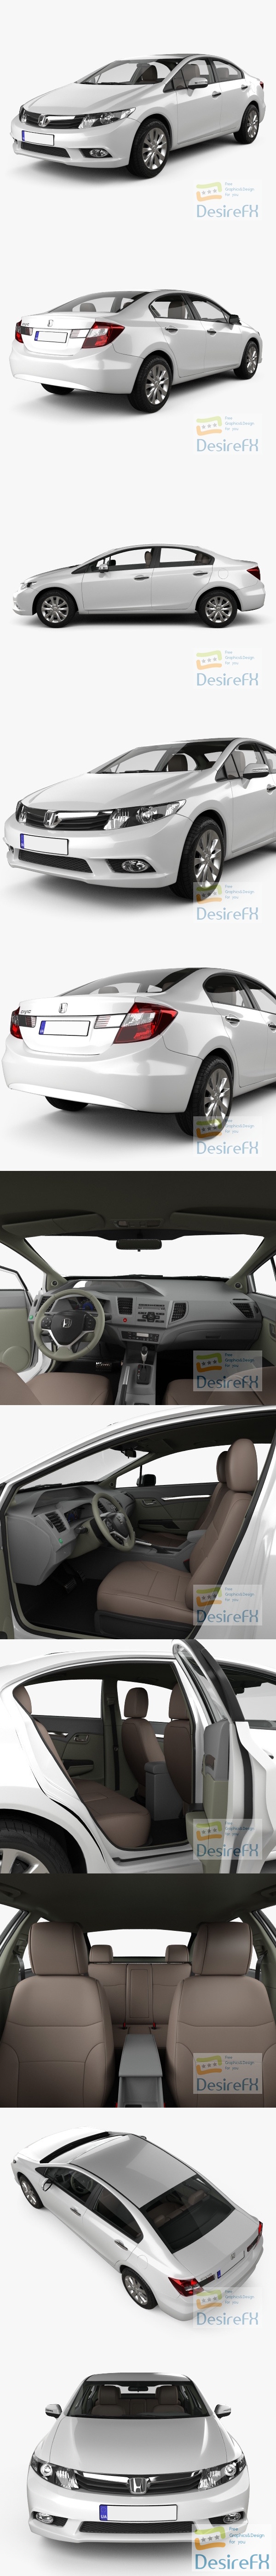 Honda Civic sedan with HQ interior 2012 3D Model